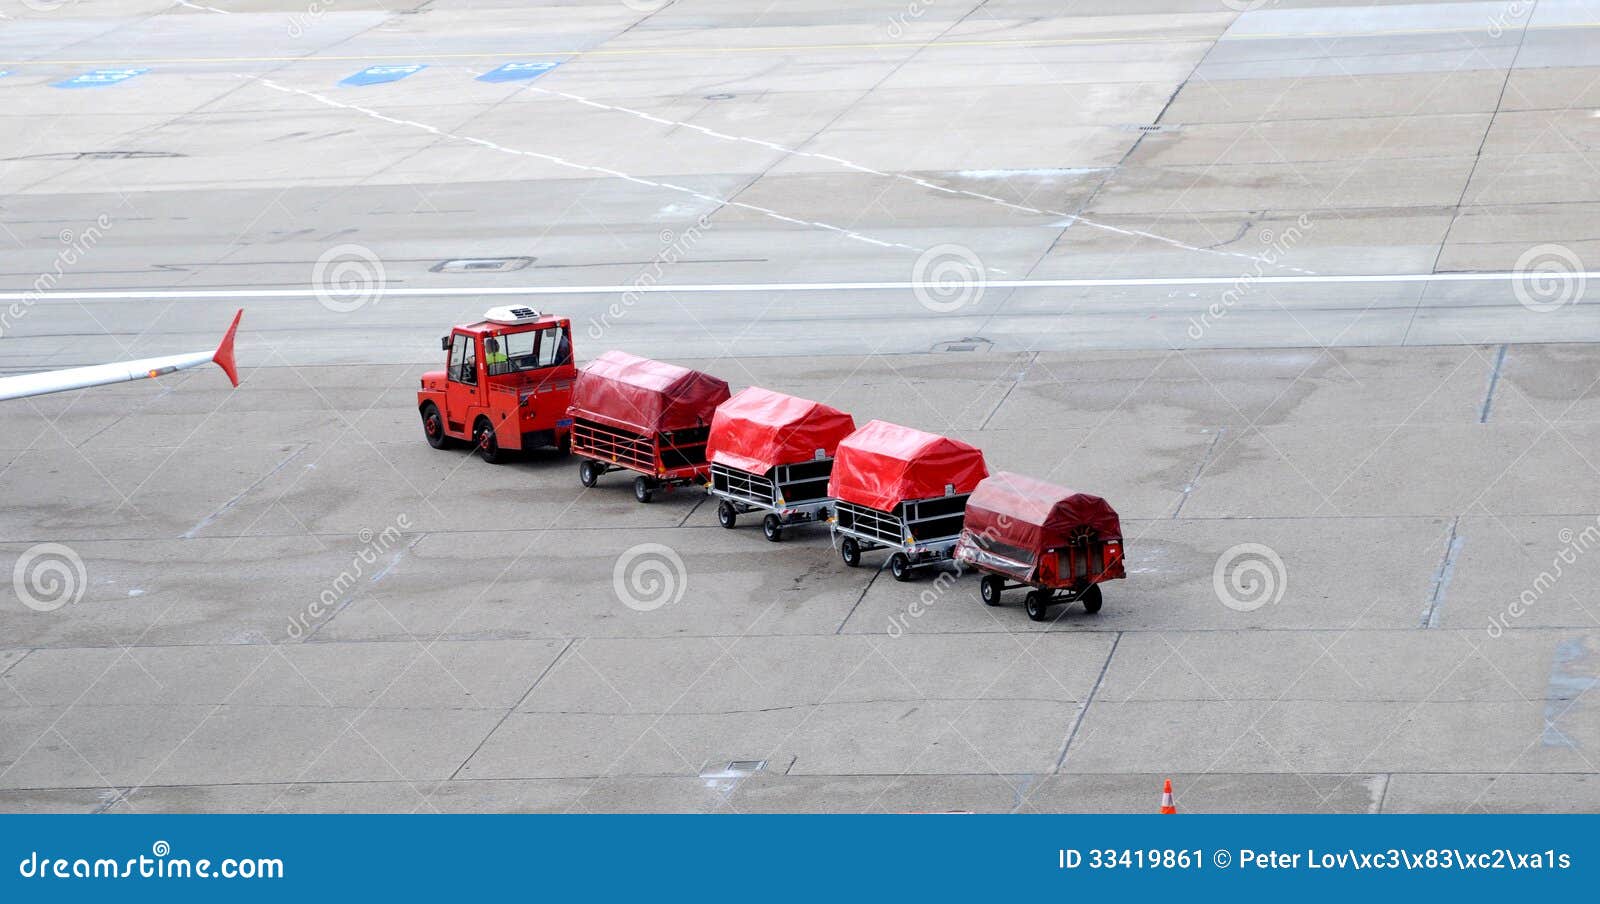 airport trucks handling baggage